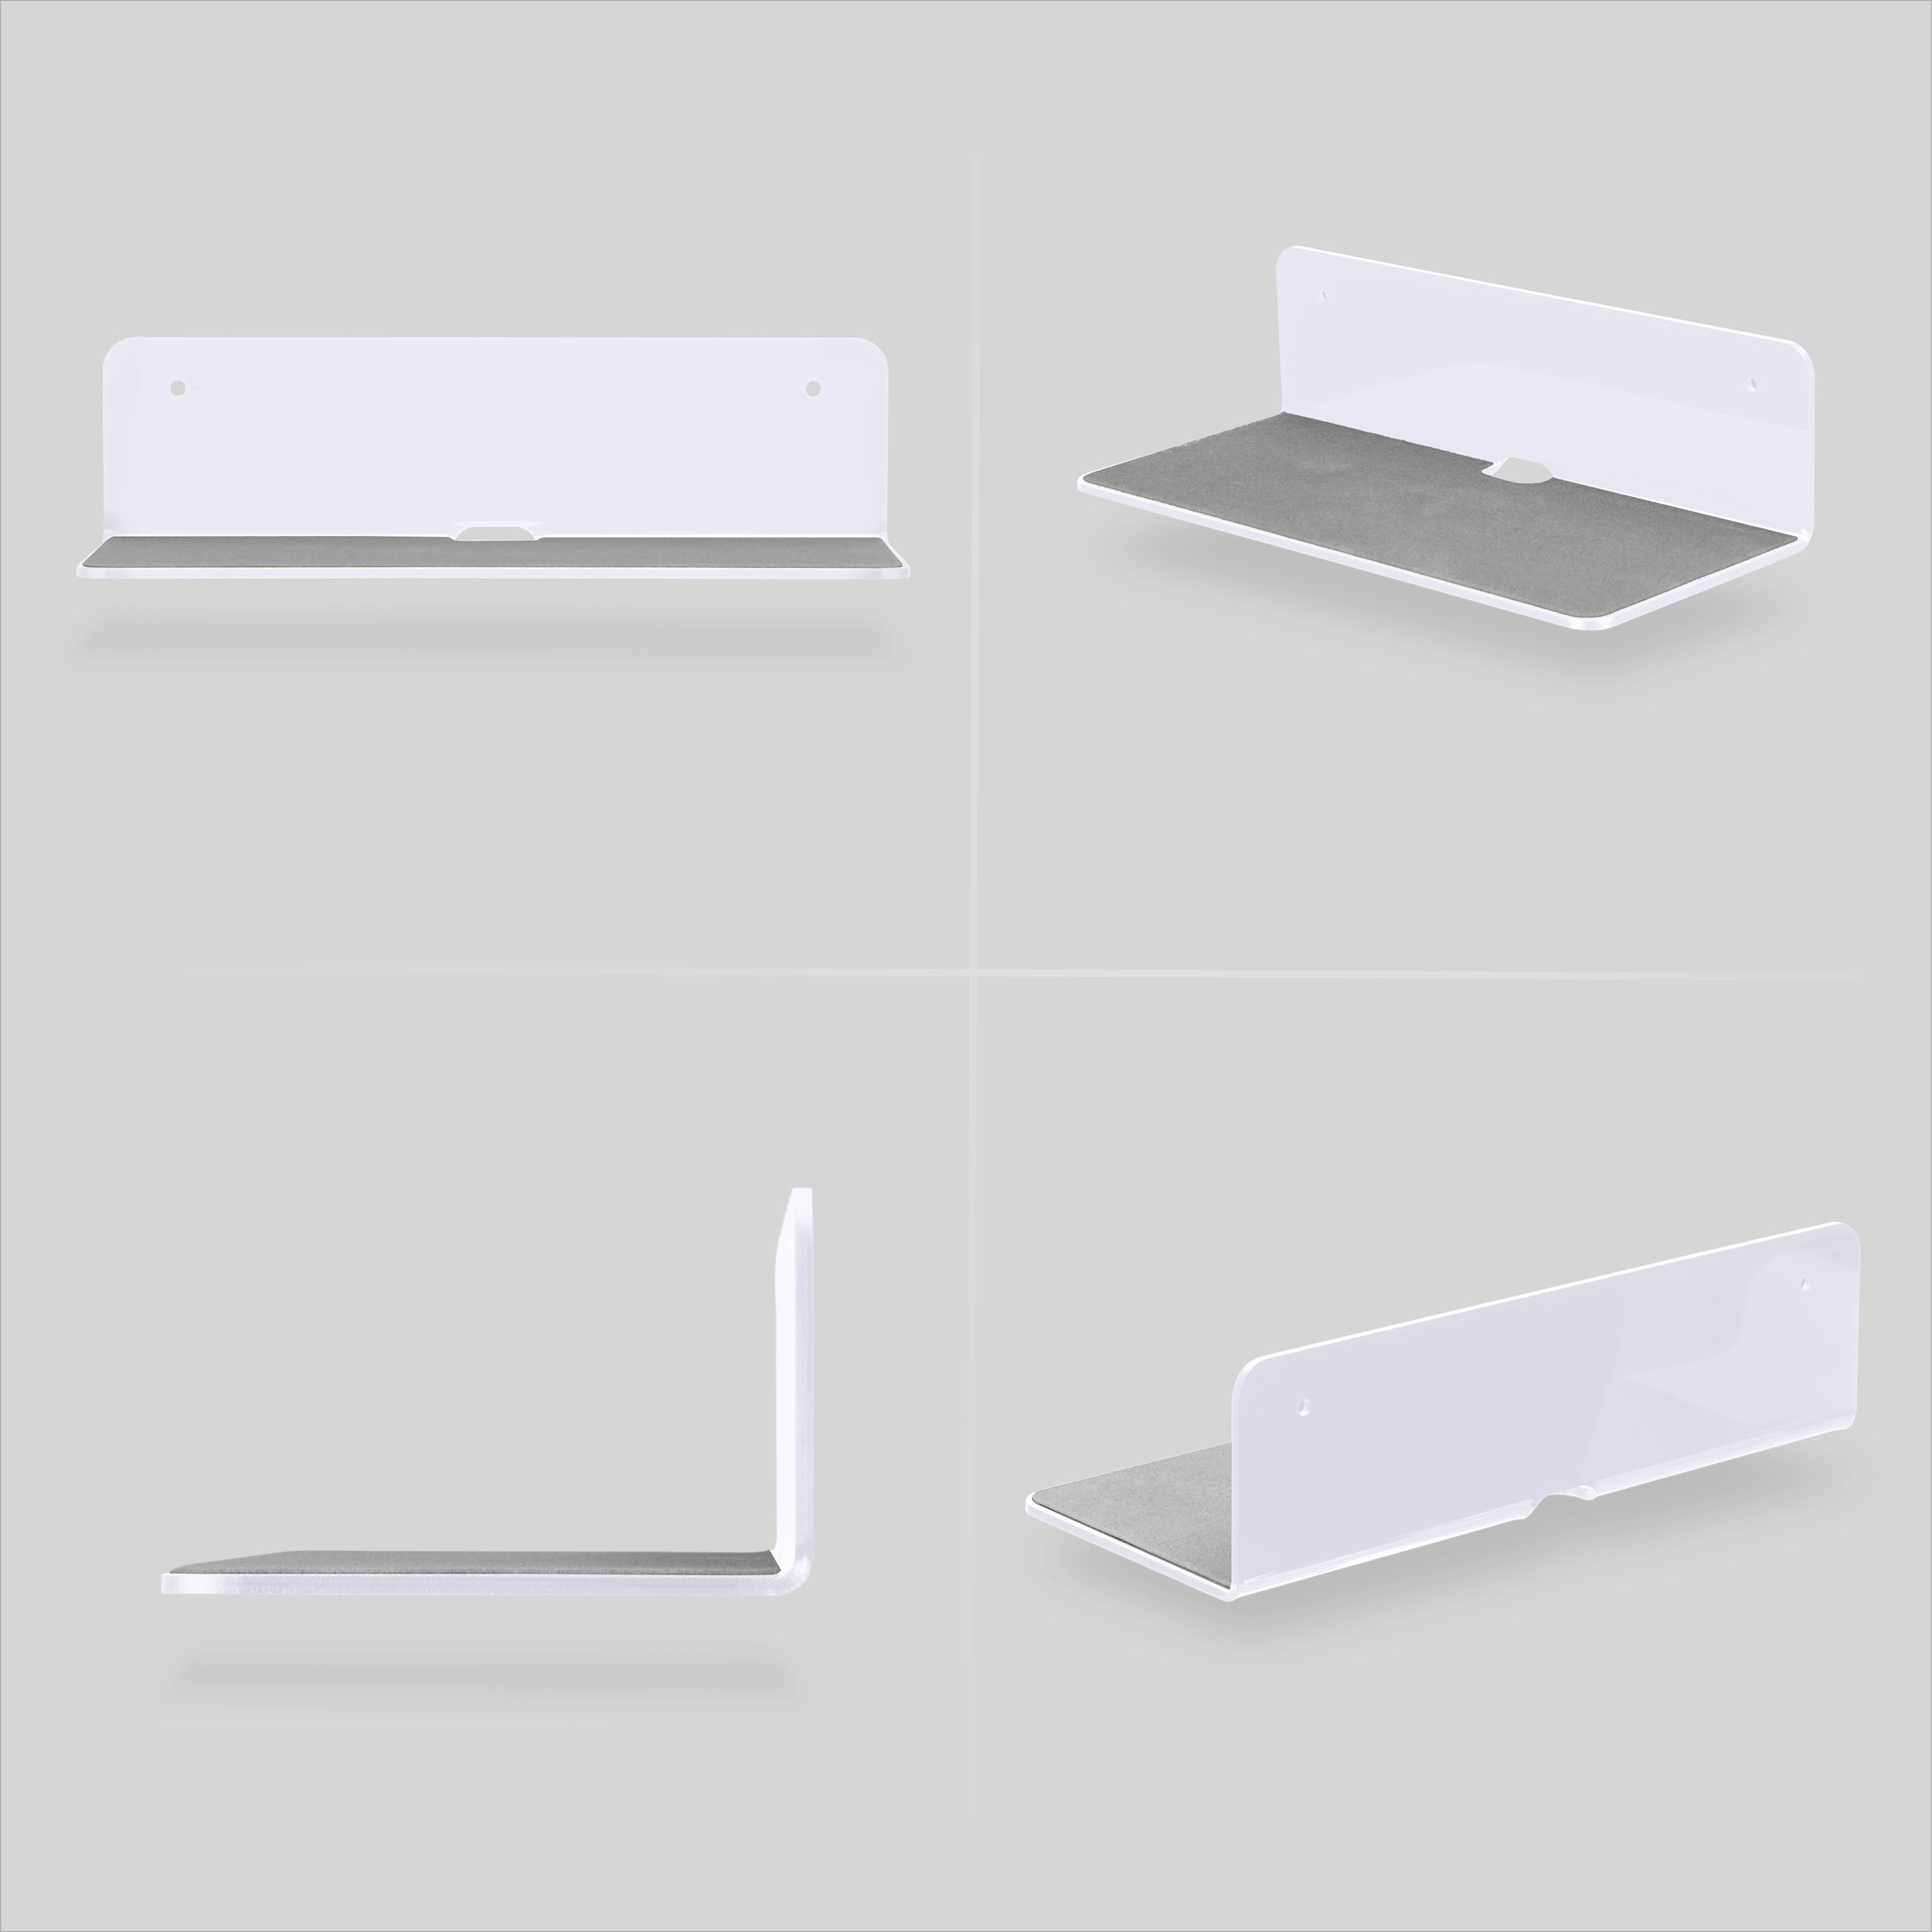 2 Pack) 9” Floating Shelf Bluetooth Speaker Stand, Adhesive